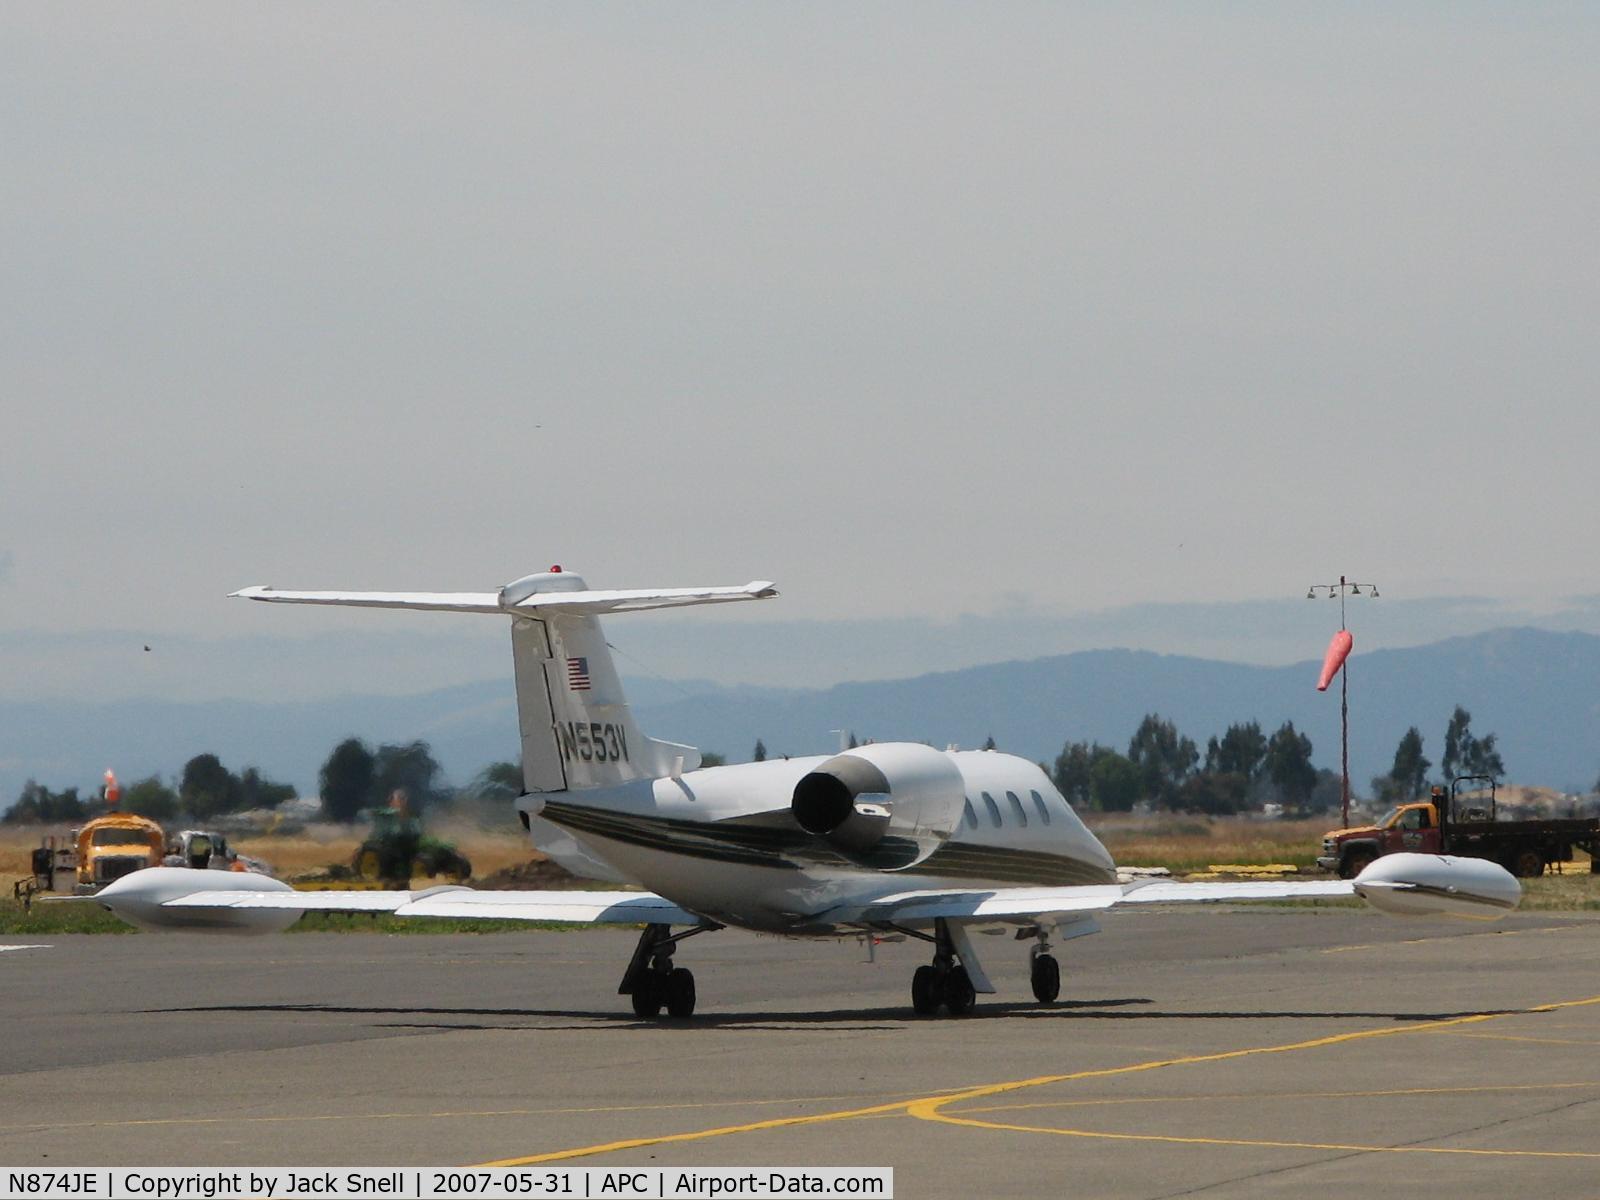 N874JE, Raytheon Aircraft Company 58 C/N TH-2045, Taken at the Nspa Cpunty Airport, Napa, CA.